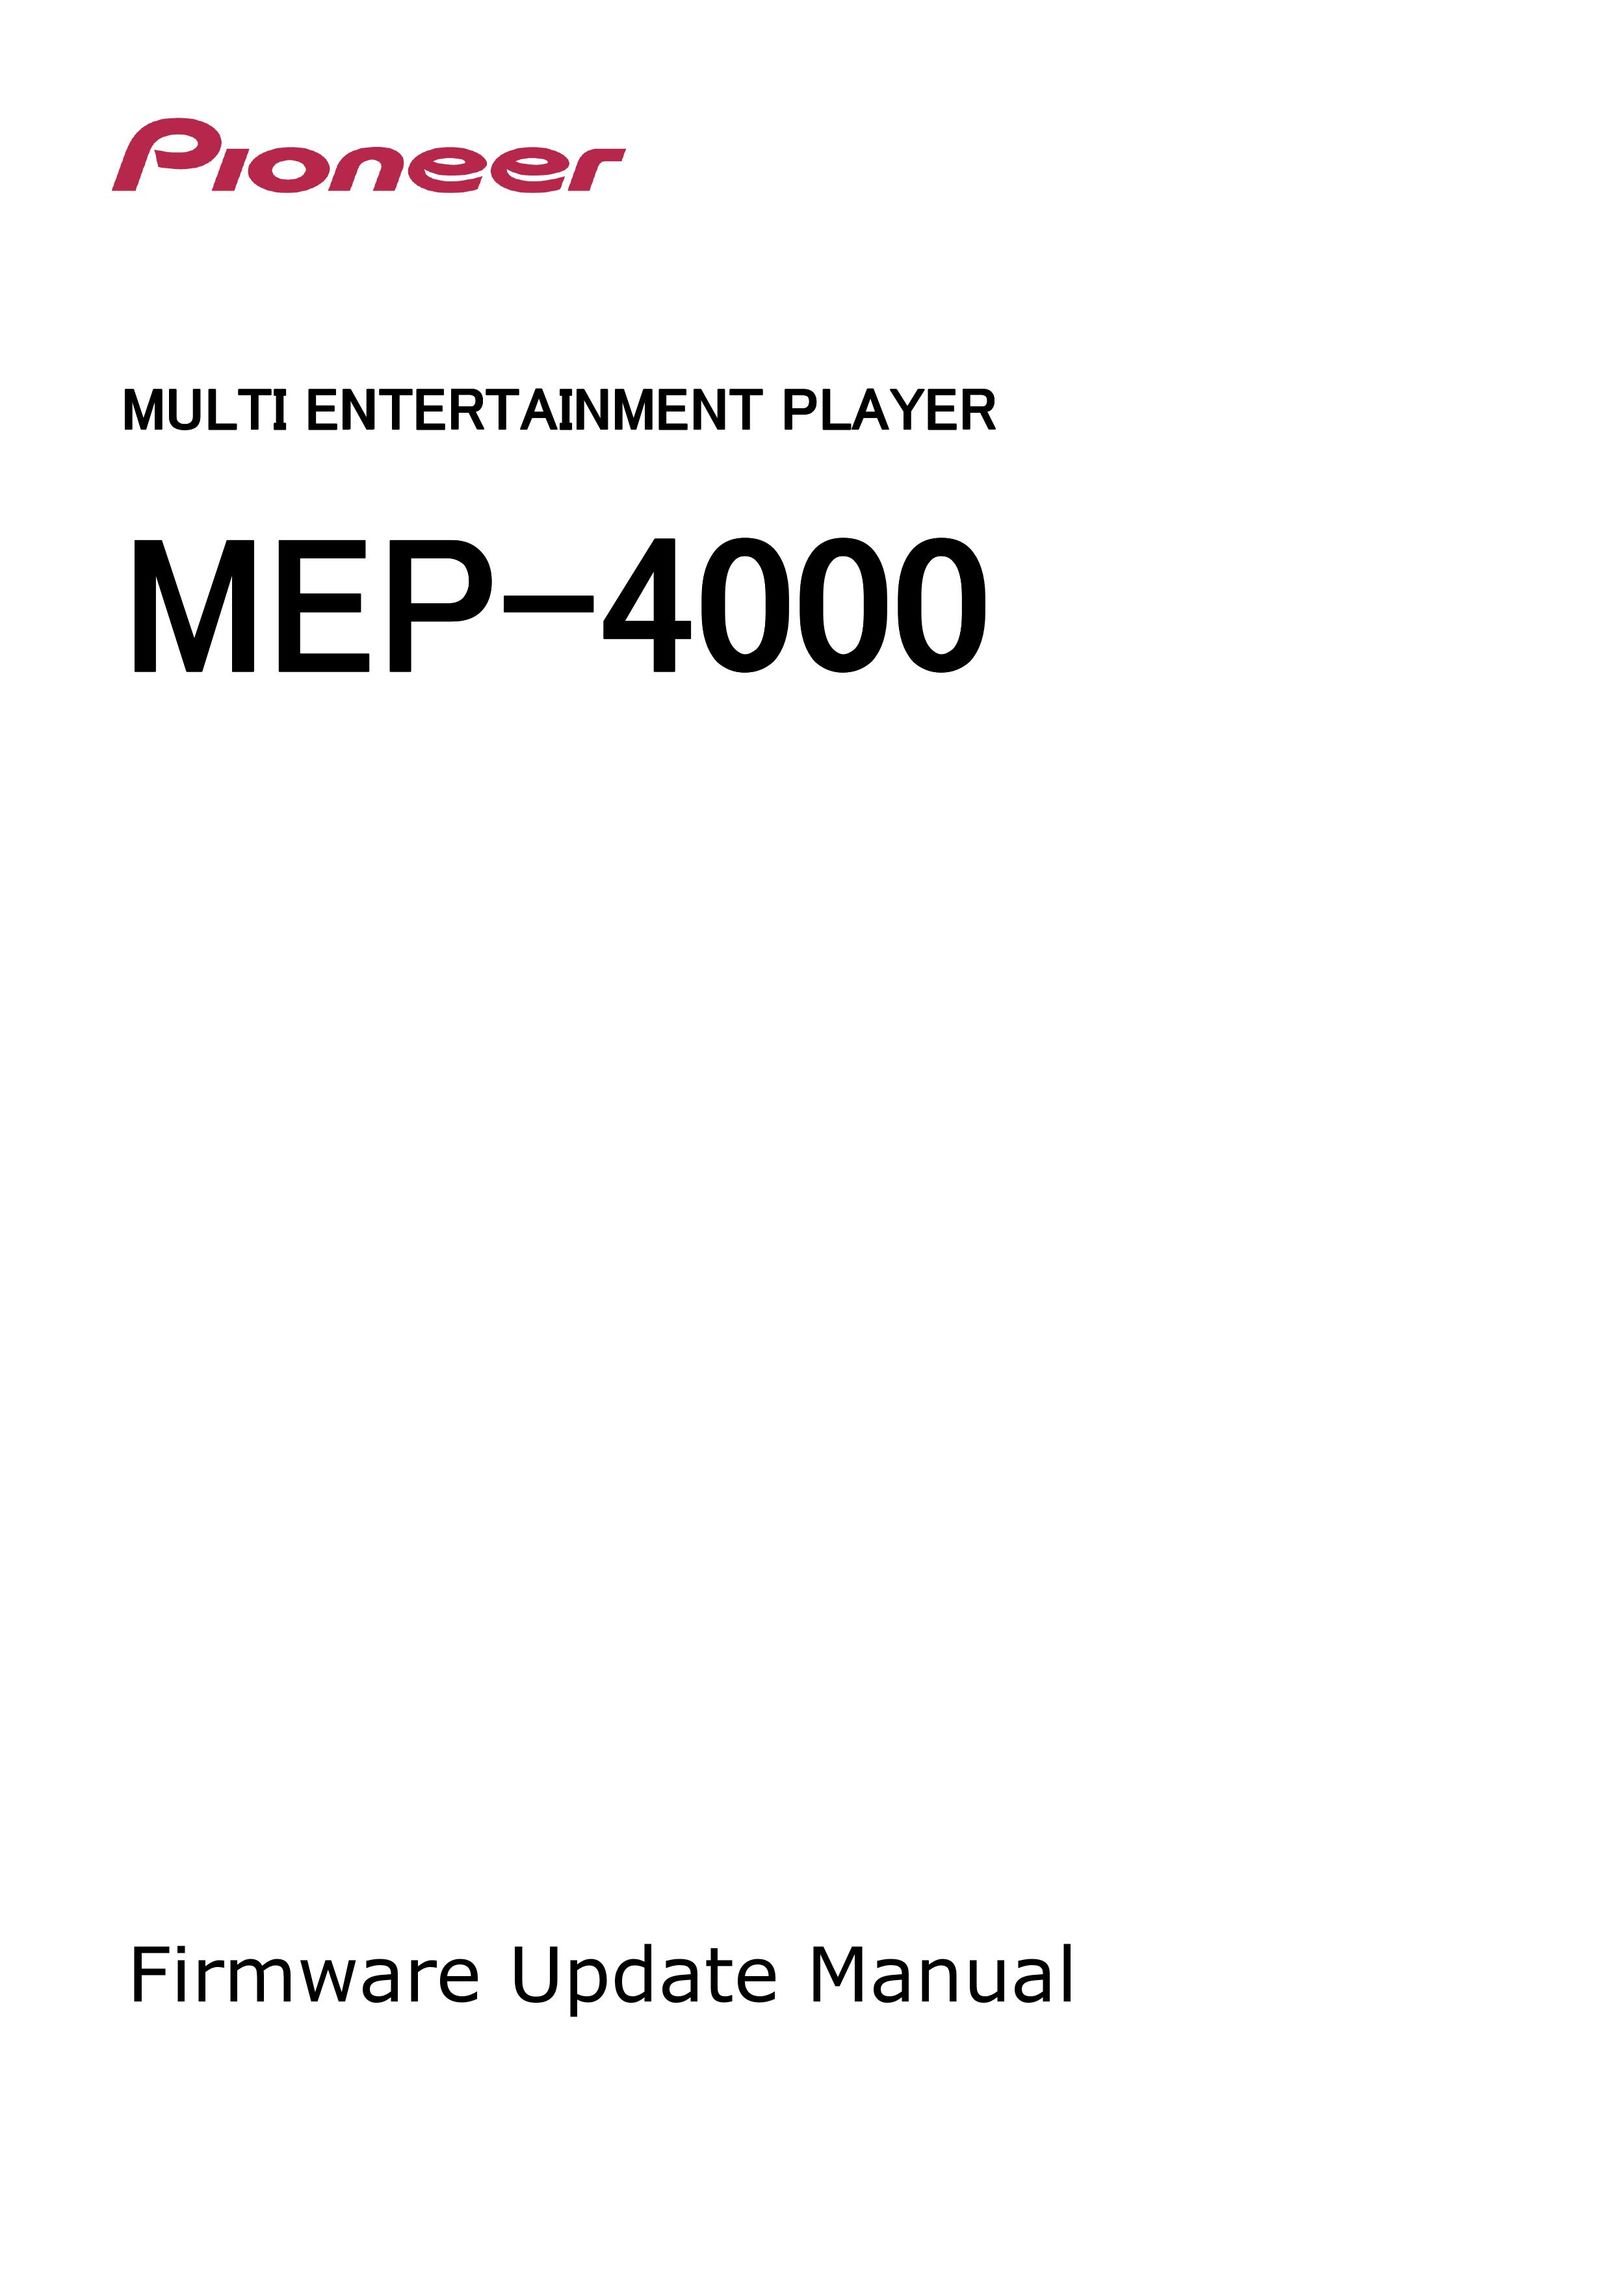 Pioneer MEP-4000 Kitchen Entertainment Center User Manual